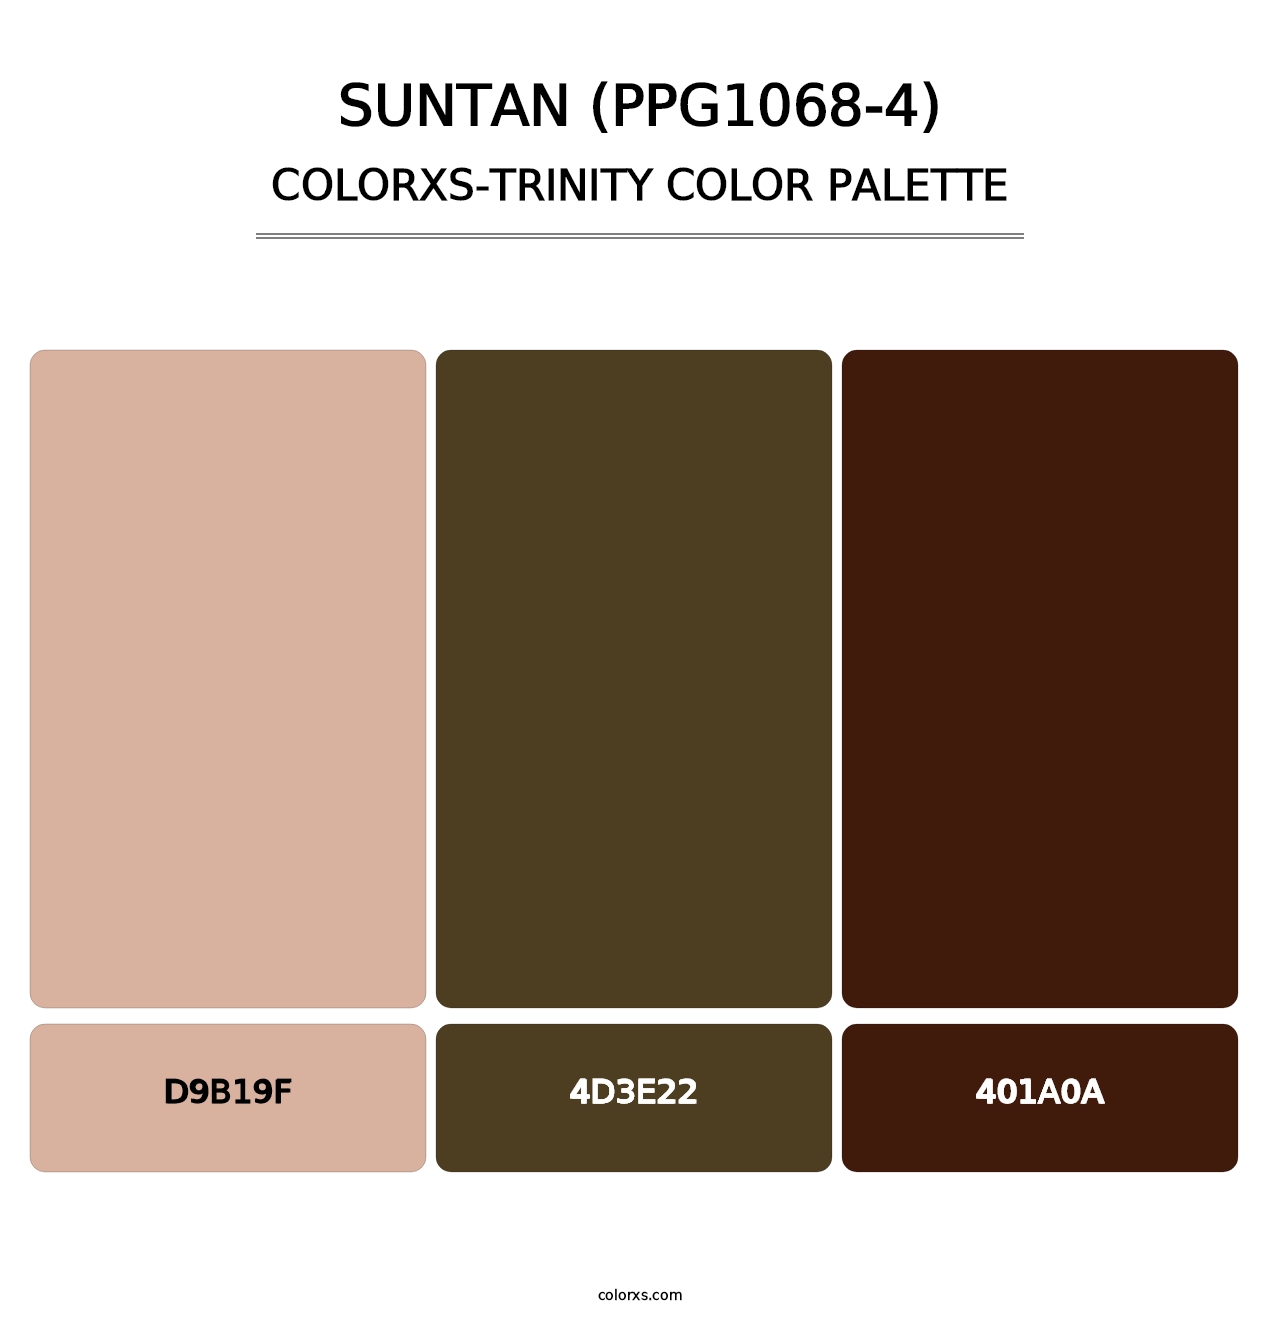 Suntan (PPG1068-4) - Colorxs Trinity Palette